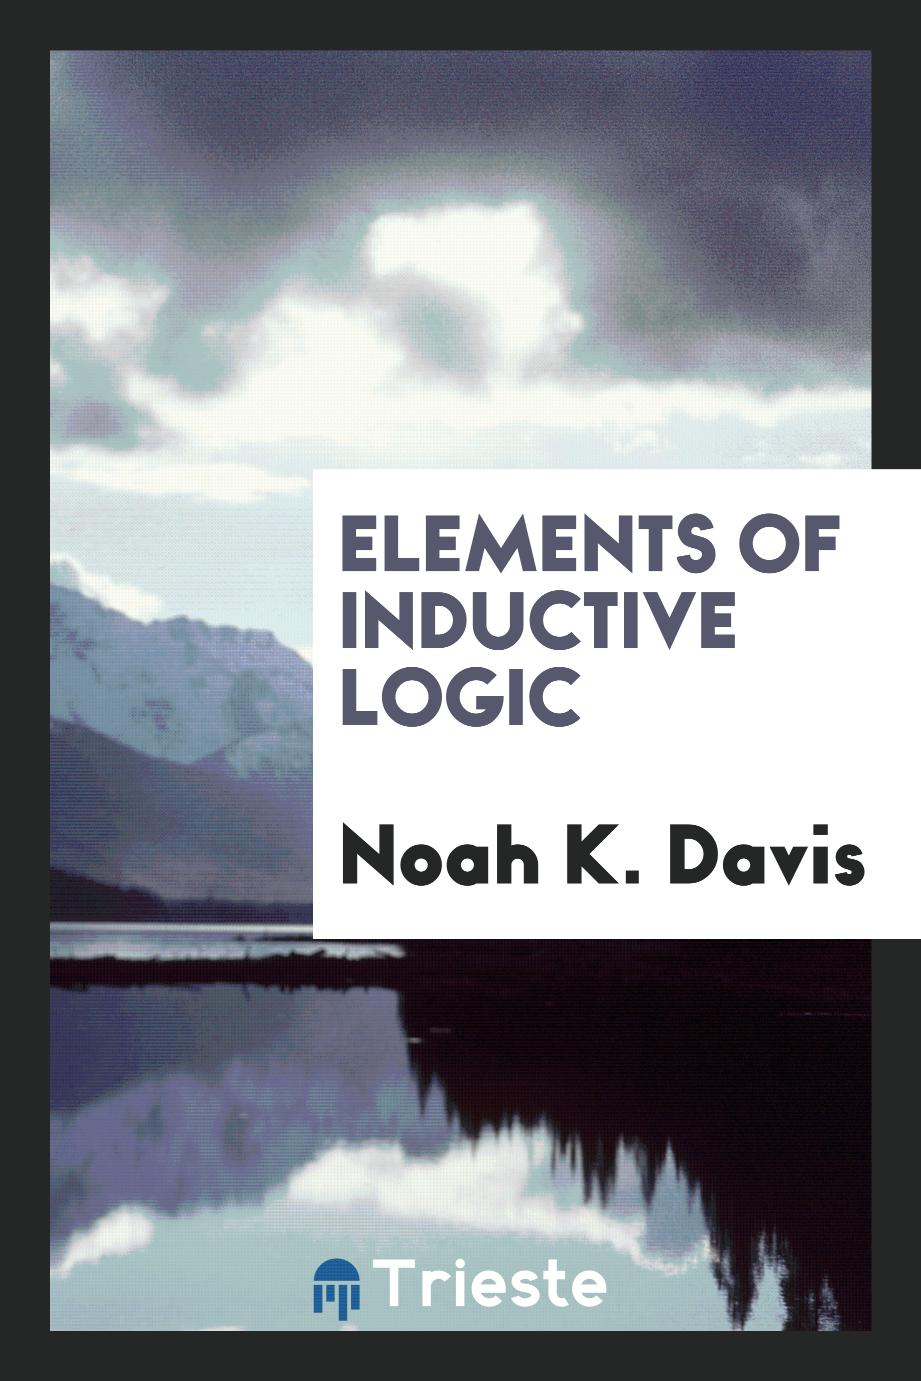 Elements of Inductive Logic